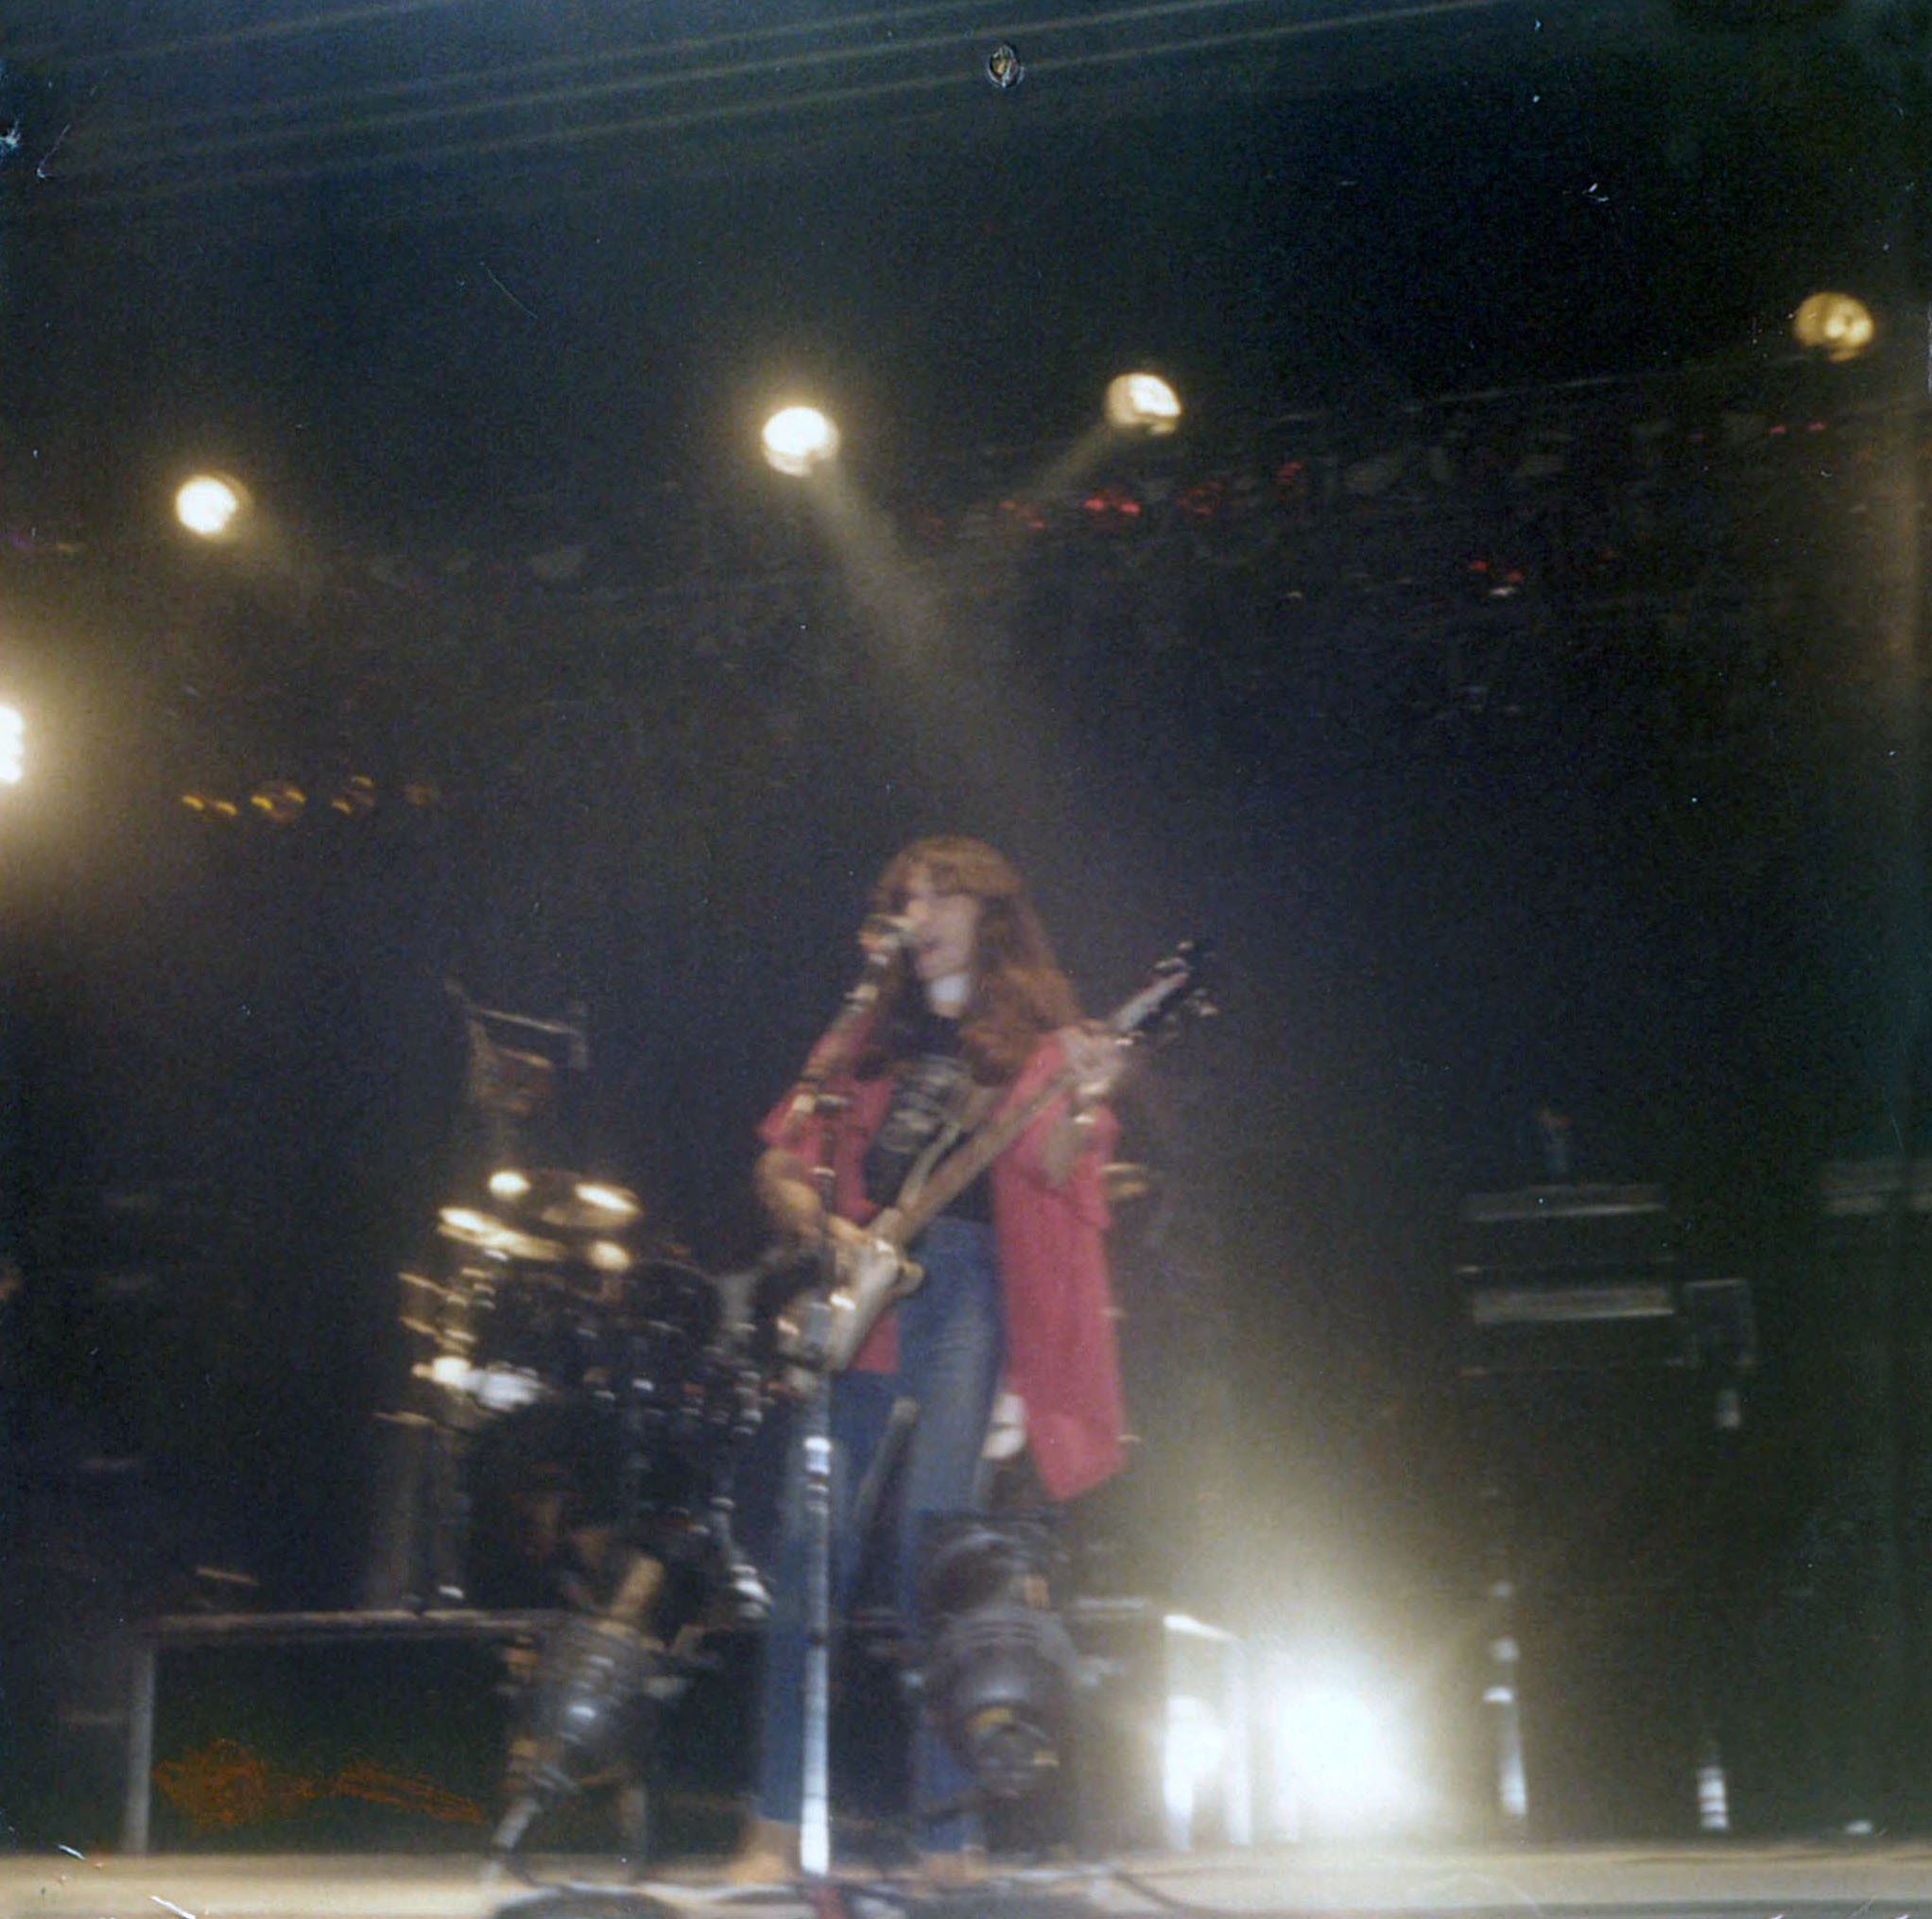 Rush 'A Farewell to Kings' Tour Pictures - Lansing Civic Center - Lansing, Michigan - January 23rd, 1978